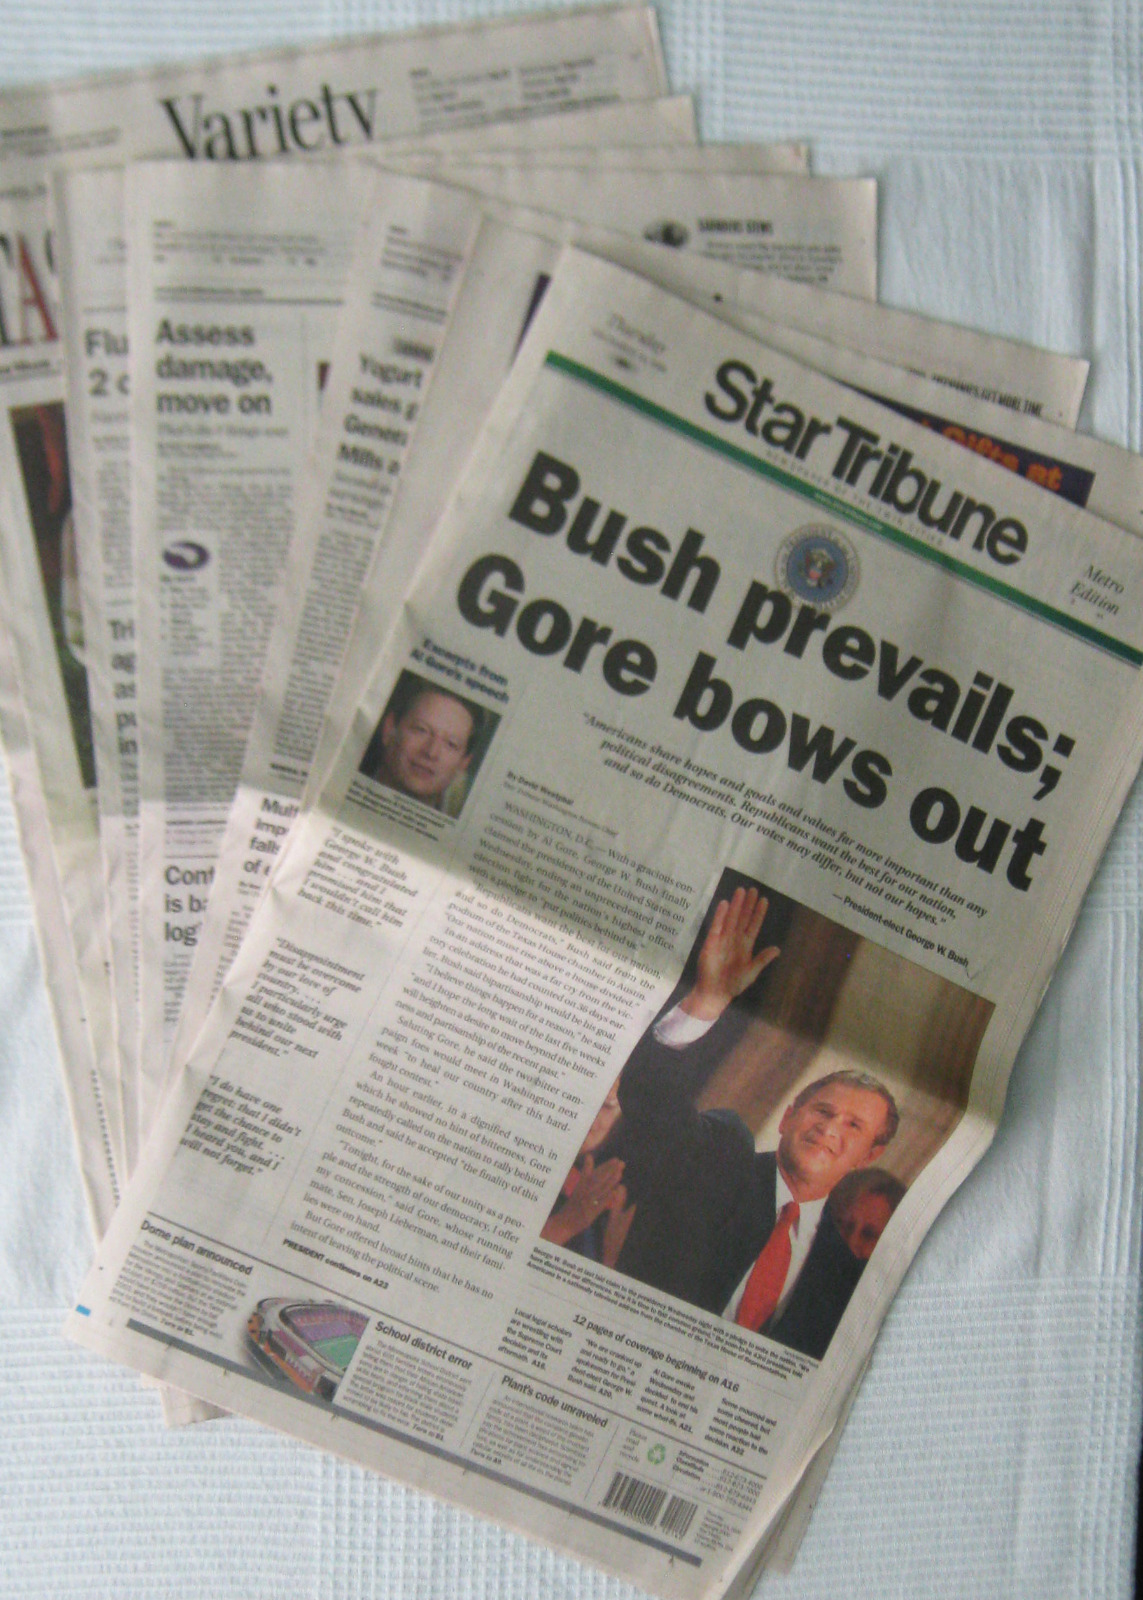 Star Tribune 2000 Minneapolis Newspaper BUSH ELECTED US PRESIDENT Gore Bows Out